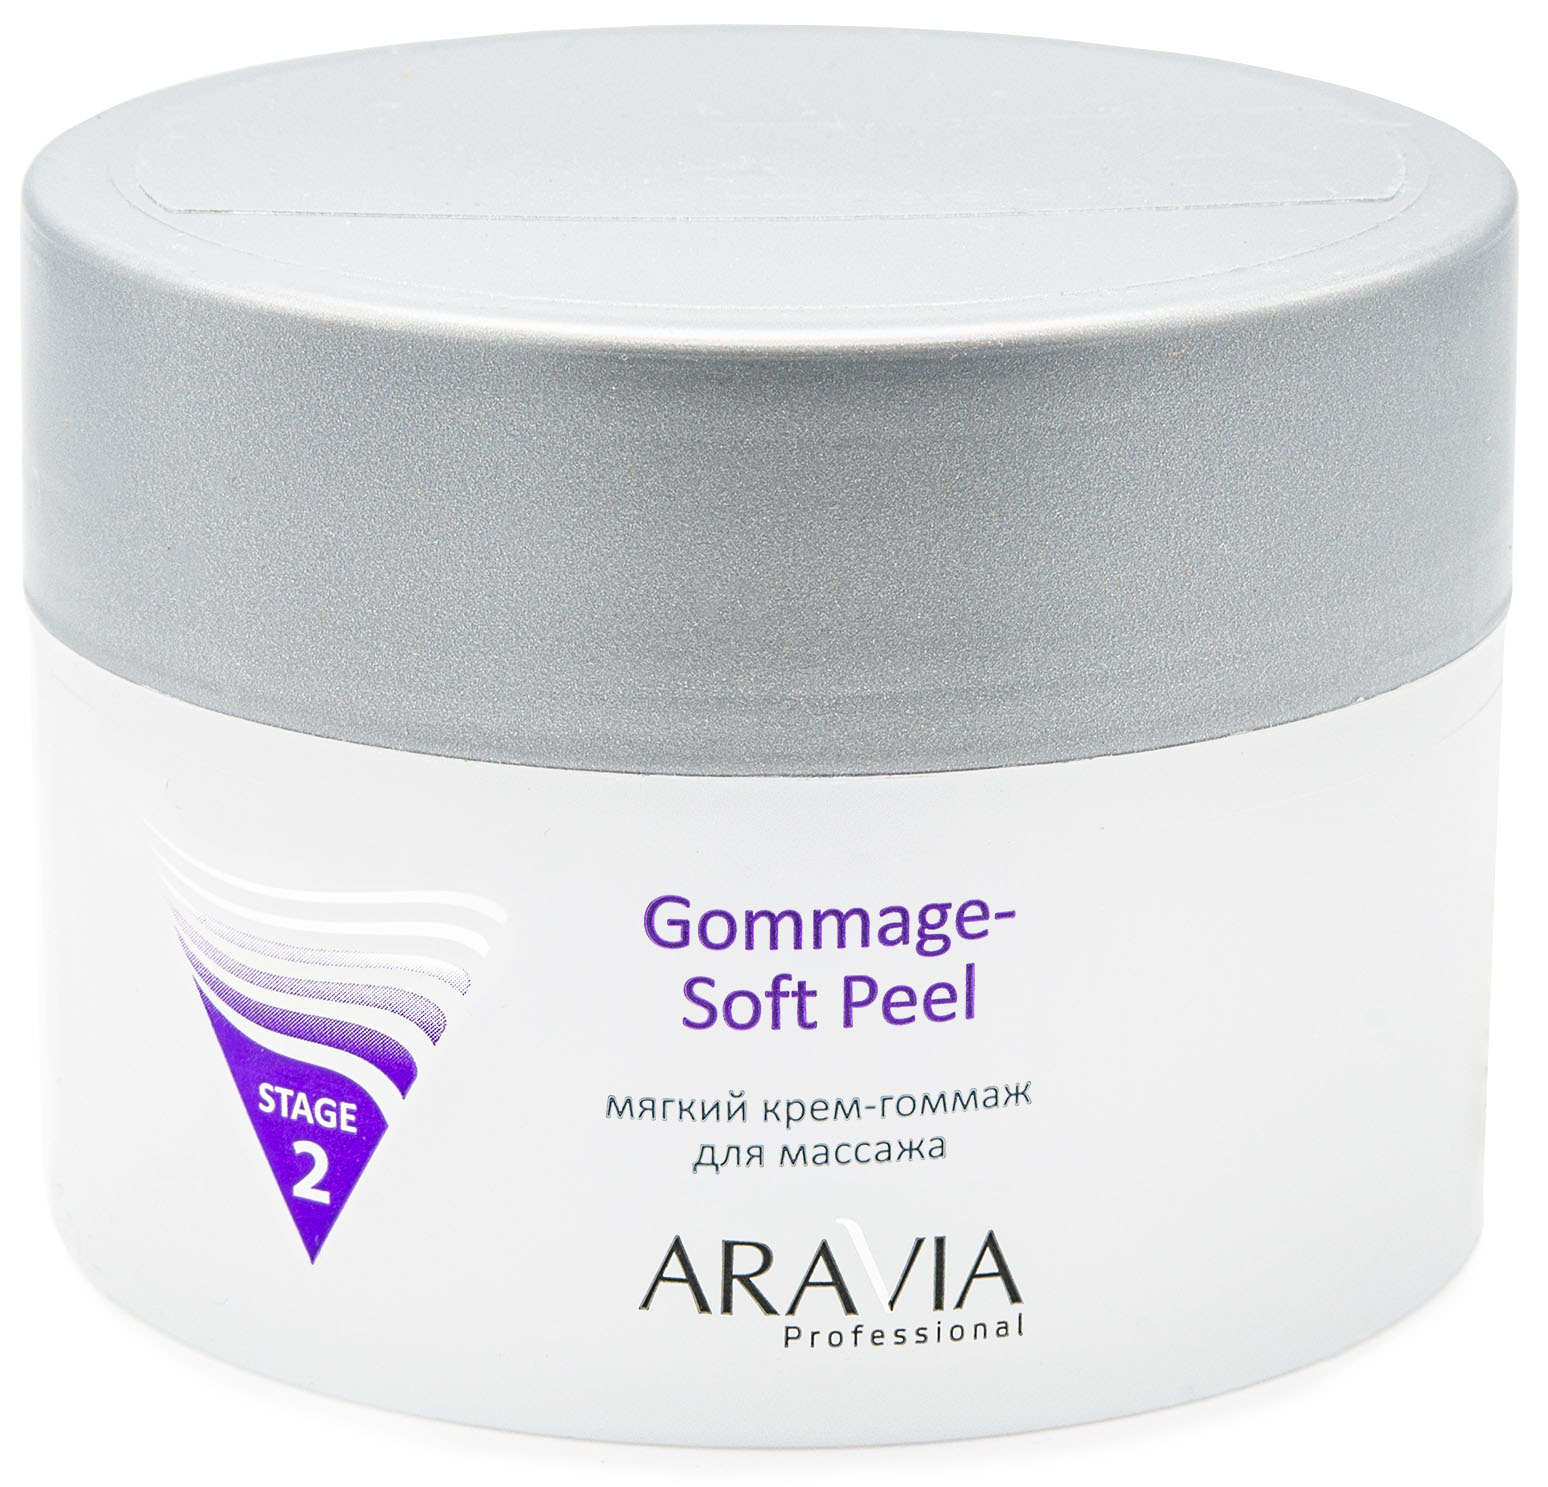 Аравия Профессионал Мягкий крем-гоммаж для массажа Gommage - Soft Peel, 150 мл (Aravia Professional, Уход за лицом) фото 0